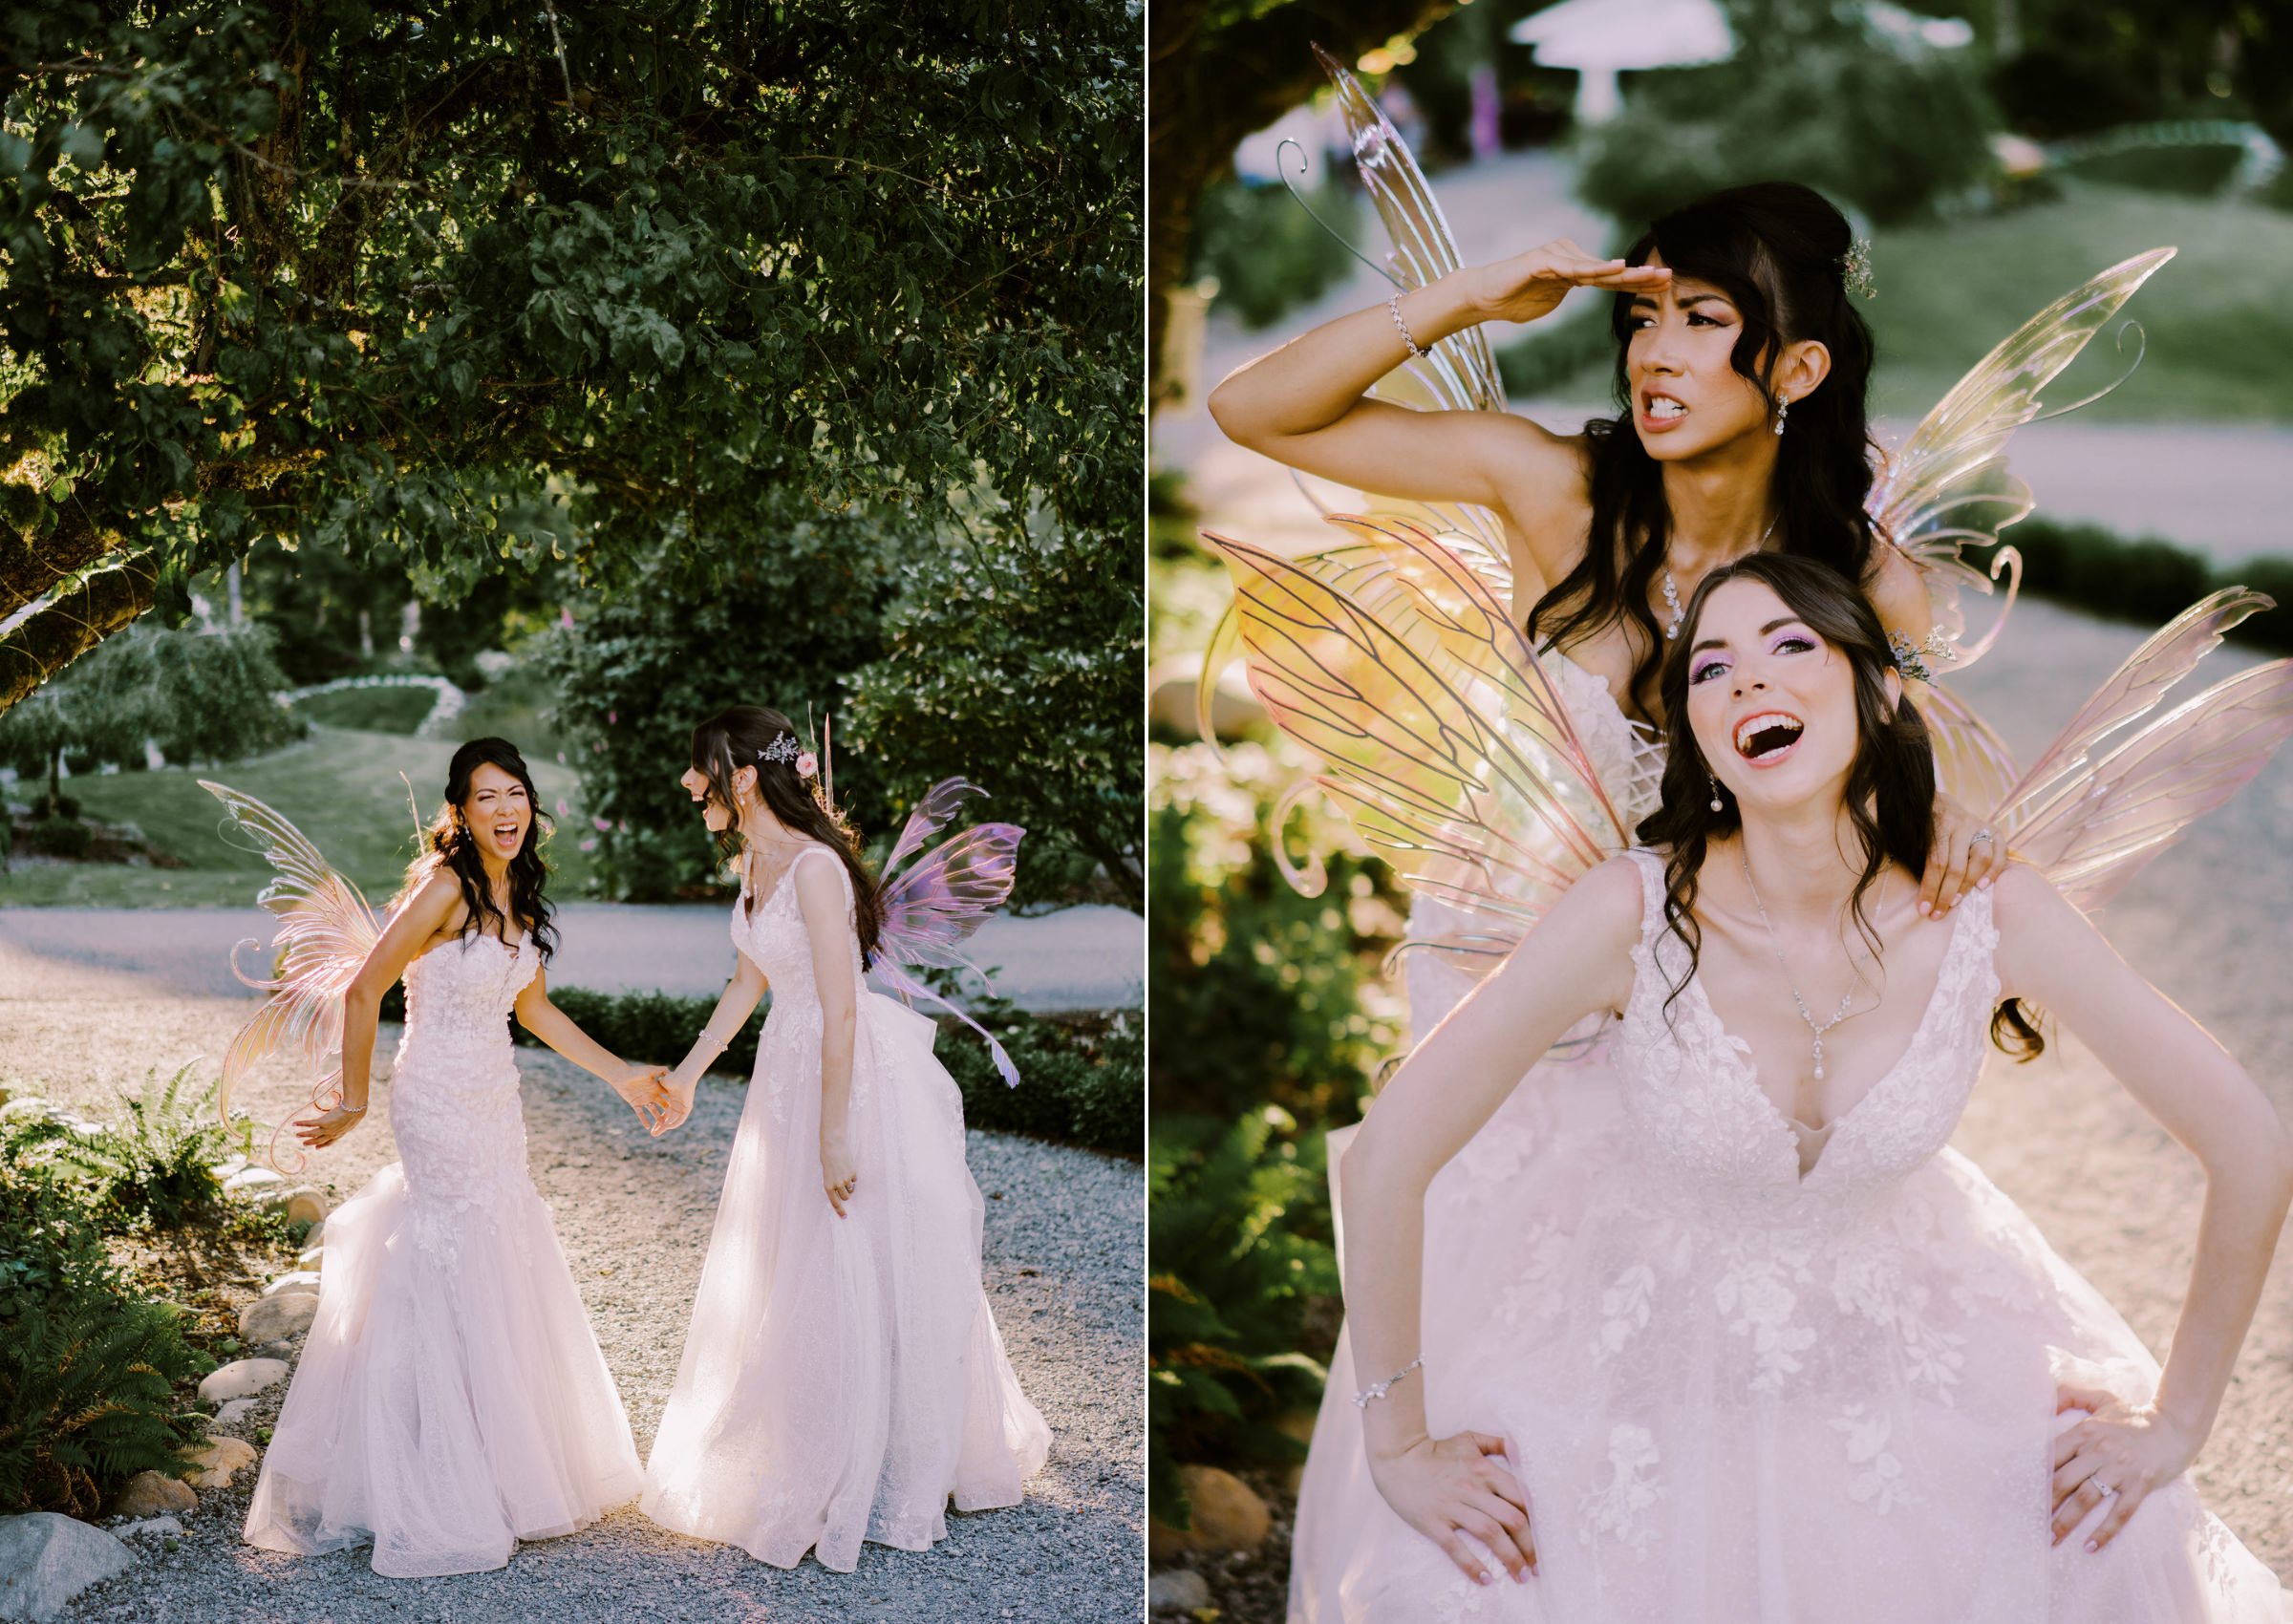 Megan and Erika's wedding photos at Graybridge Venue in Snohomish WA, summer 2022